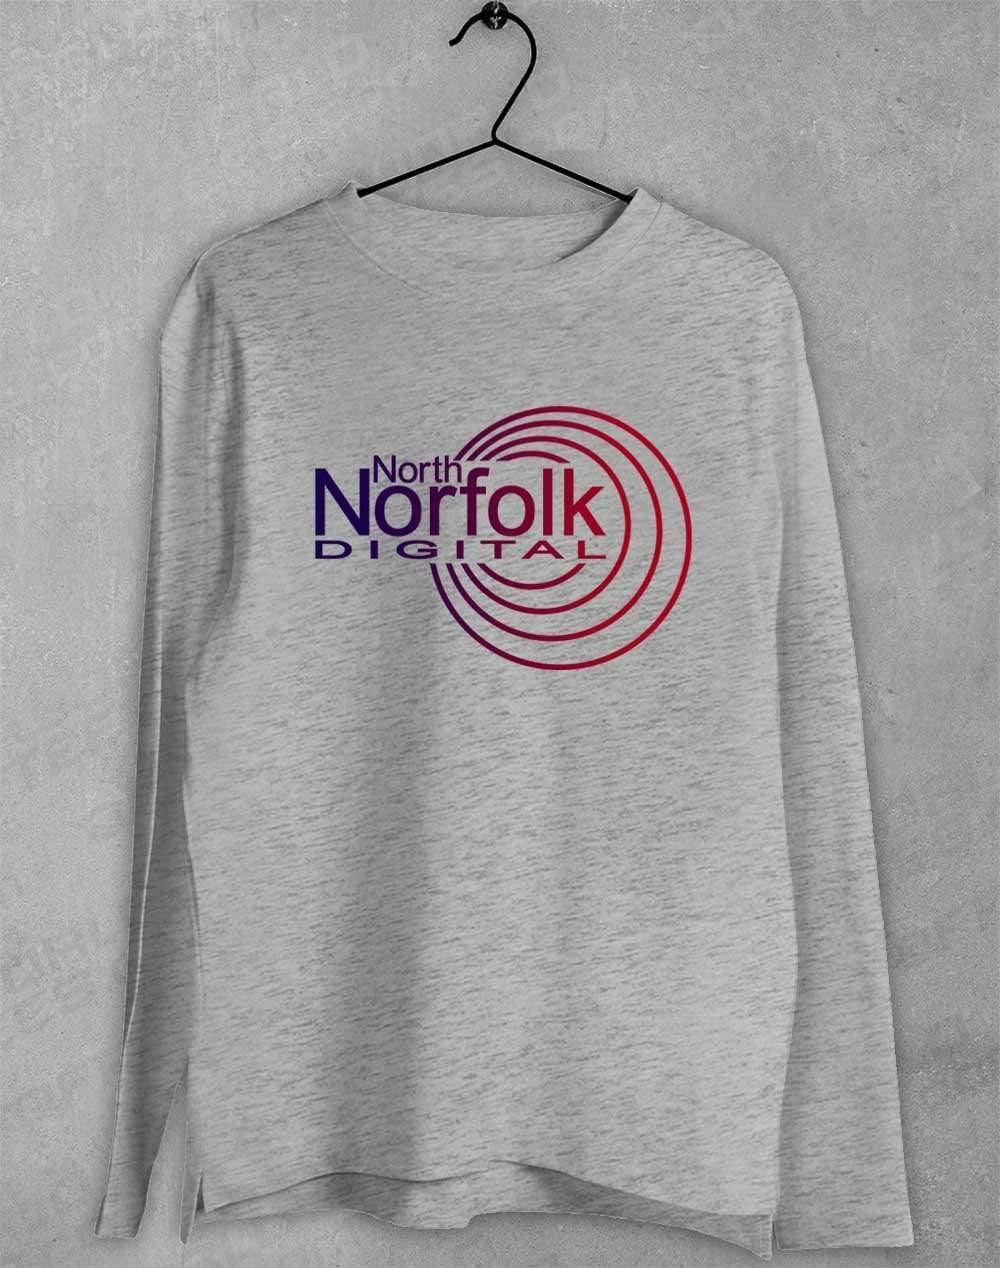 North Norfolk Digital Long Sleeve T-Shirt S / Sport Grey  - Off World Tees